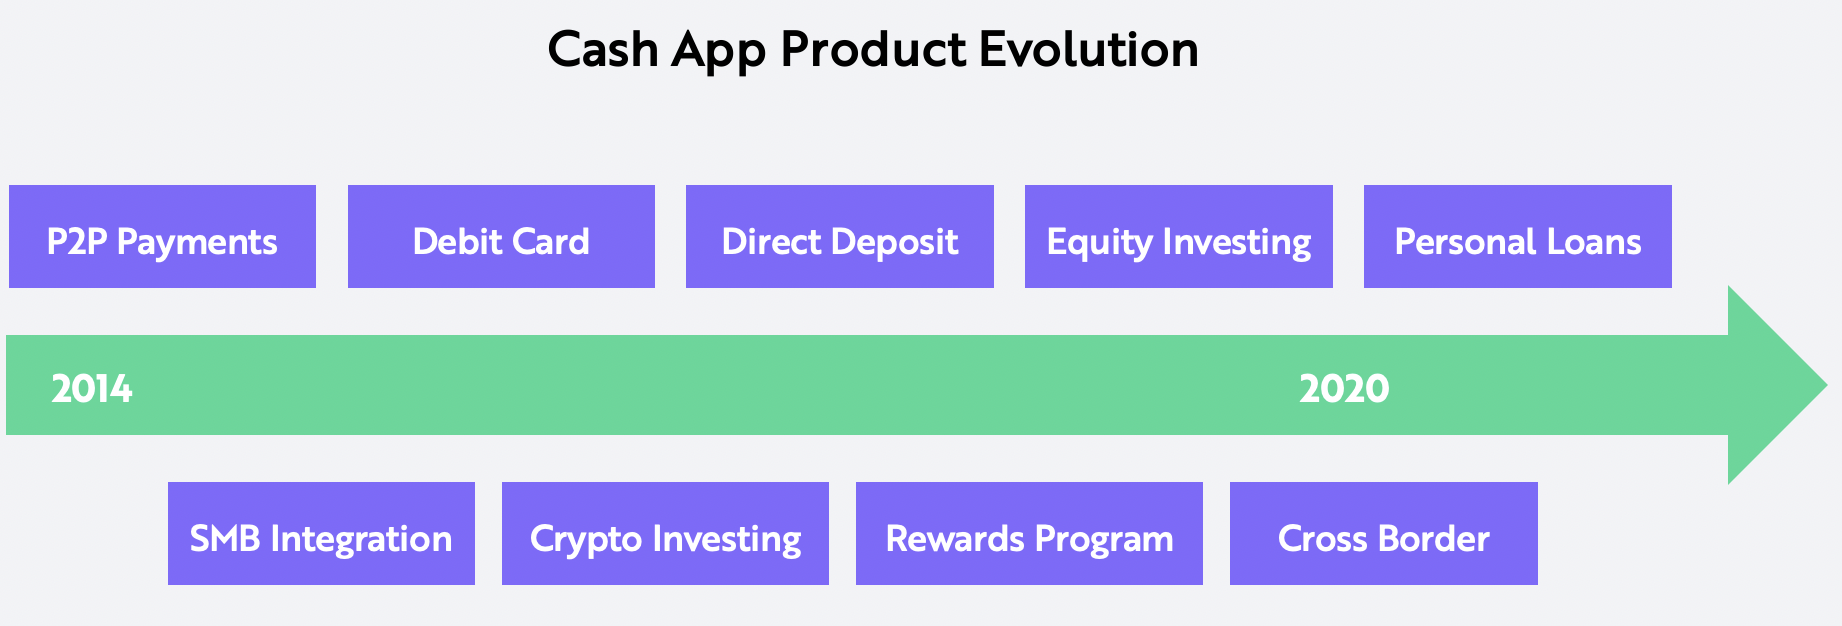 Square Valuation Cash App Product Evolution